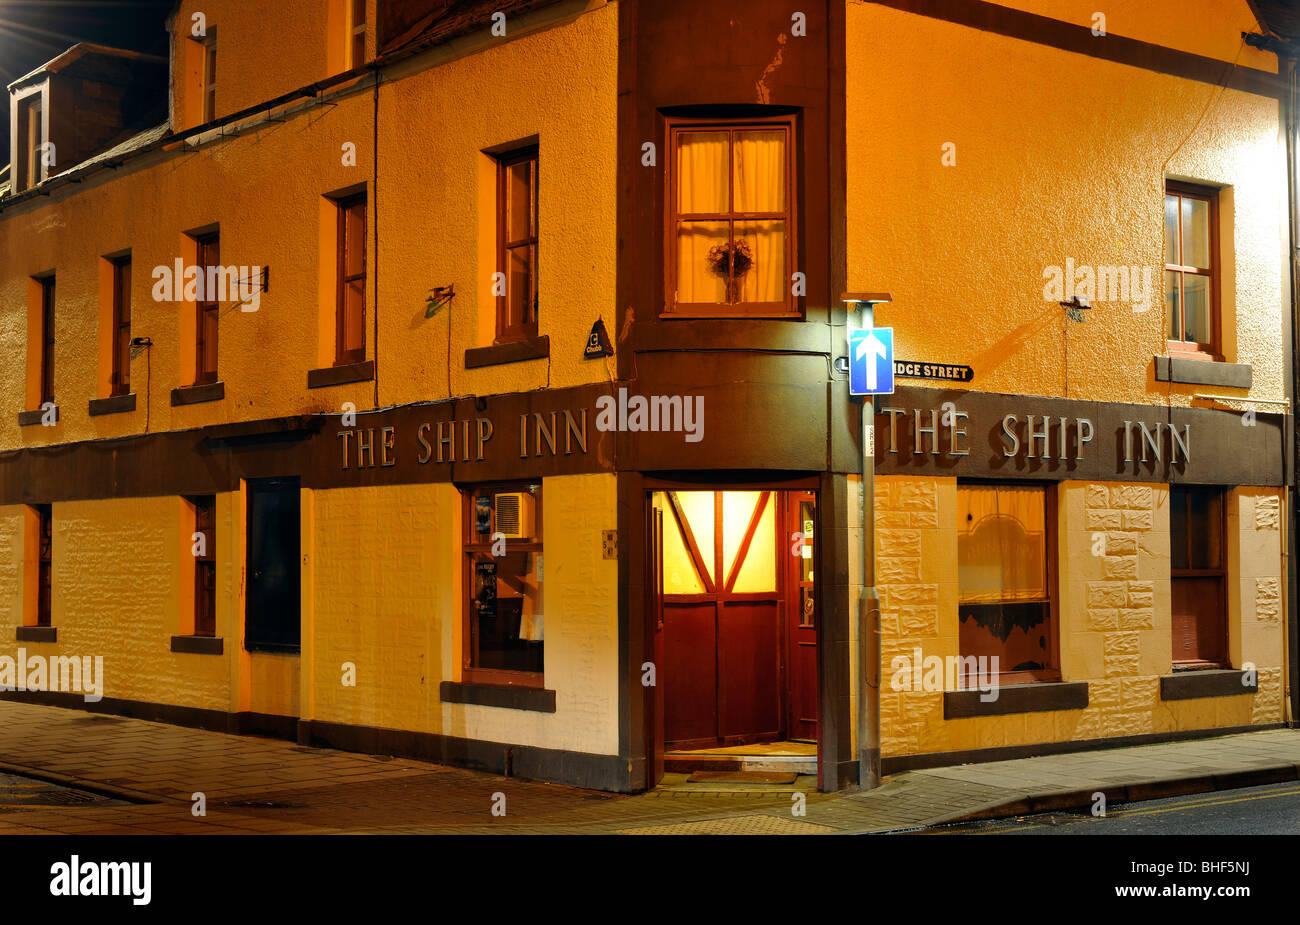 The Ship Inn, Market Gate, Arbroath, Angus, Scotland, UK. Stock Photo